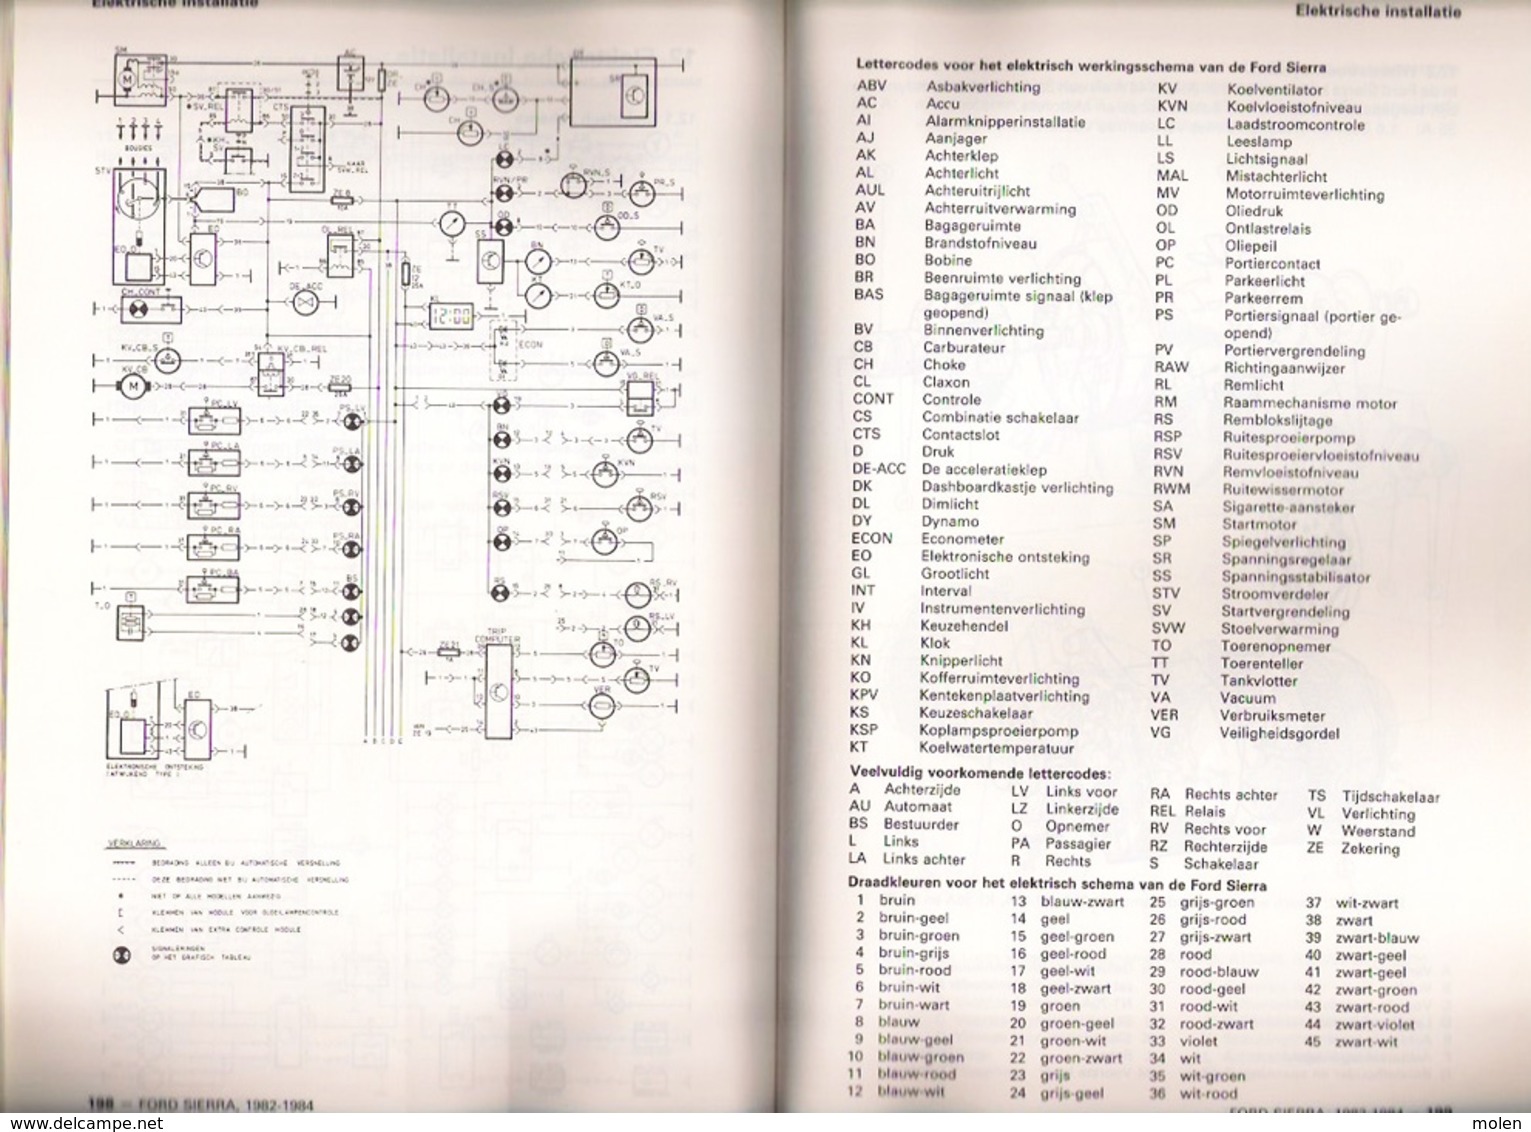 VRAAGBAAK FORD SIERRA modellen 1982-84 Handleiding onderhoud & afstelgegevens door P H OLVING ©1984 246blz AUTO Z934